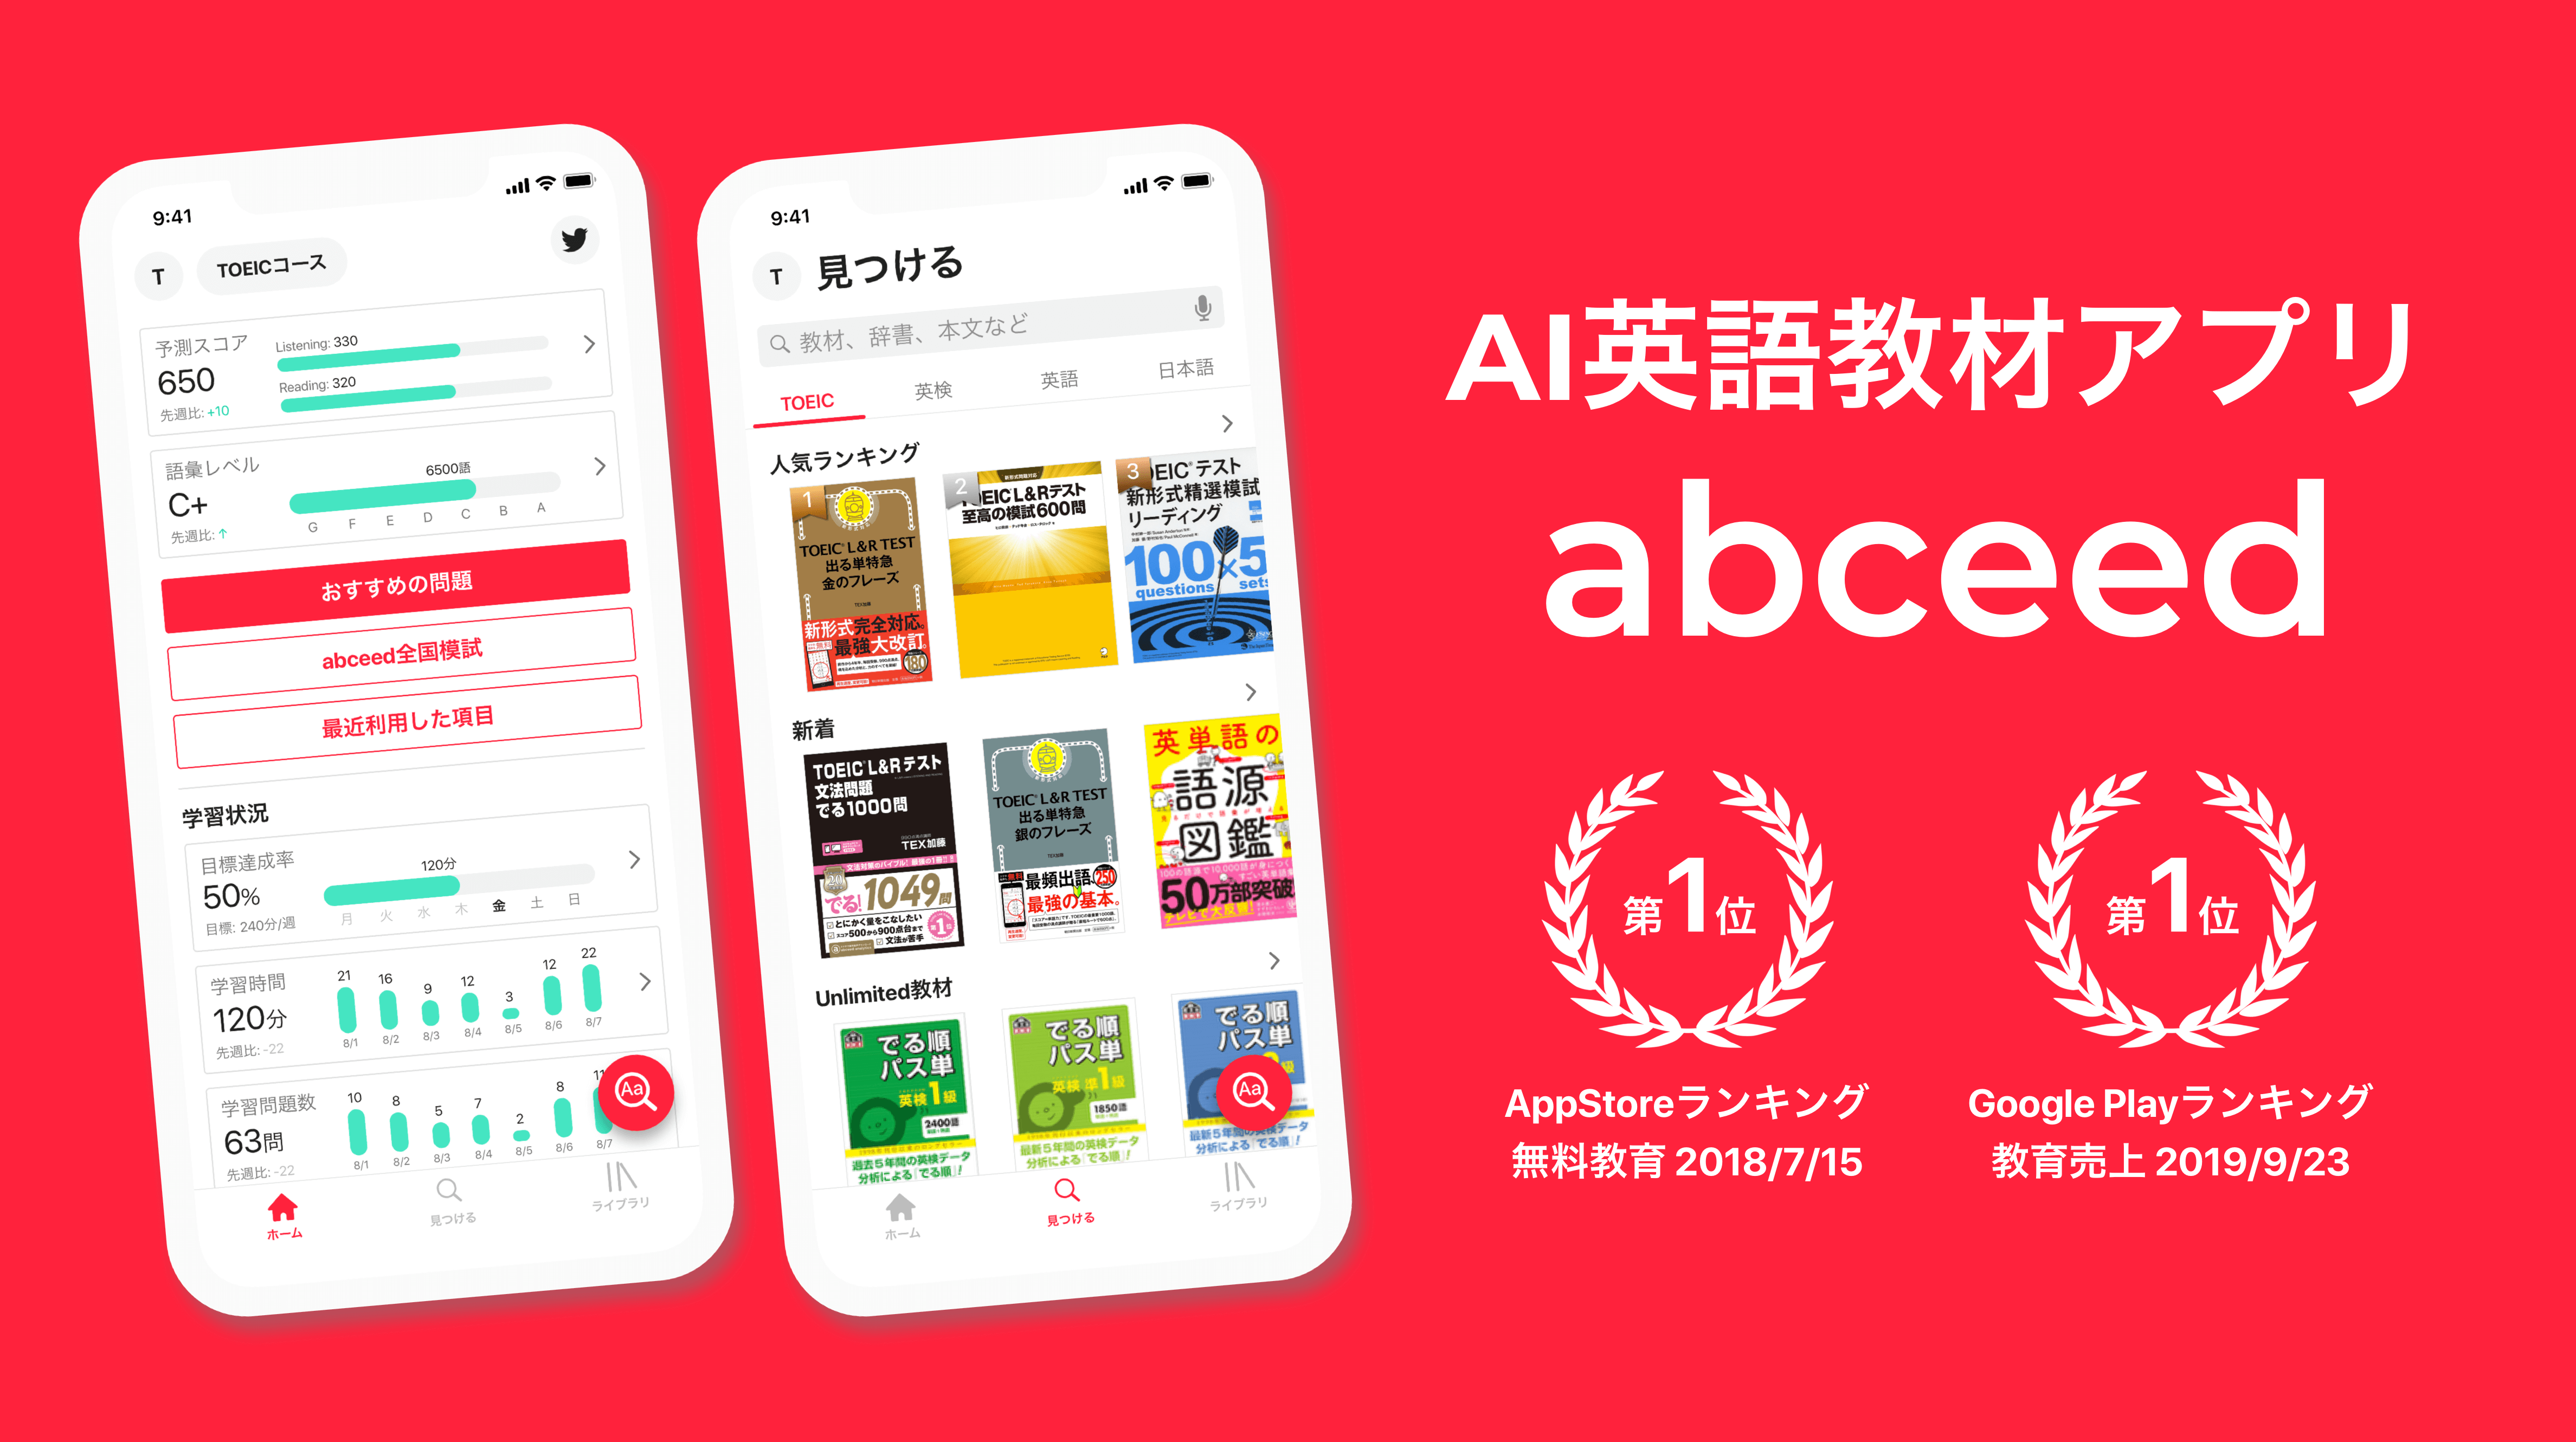 Ai英語教材アプリ Abceed の最新バージョンをリリース 株式会社globeeのプレスリリース